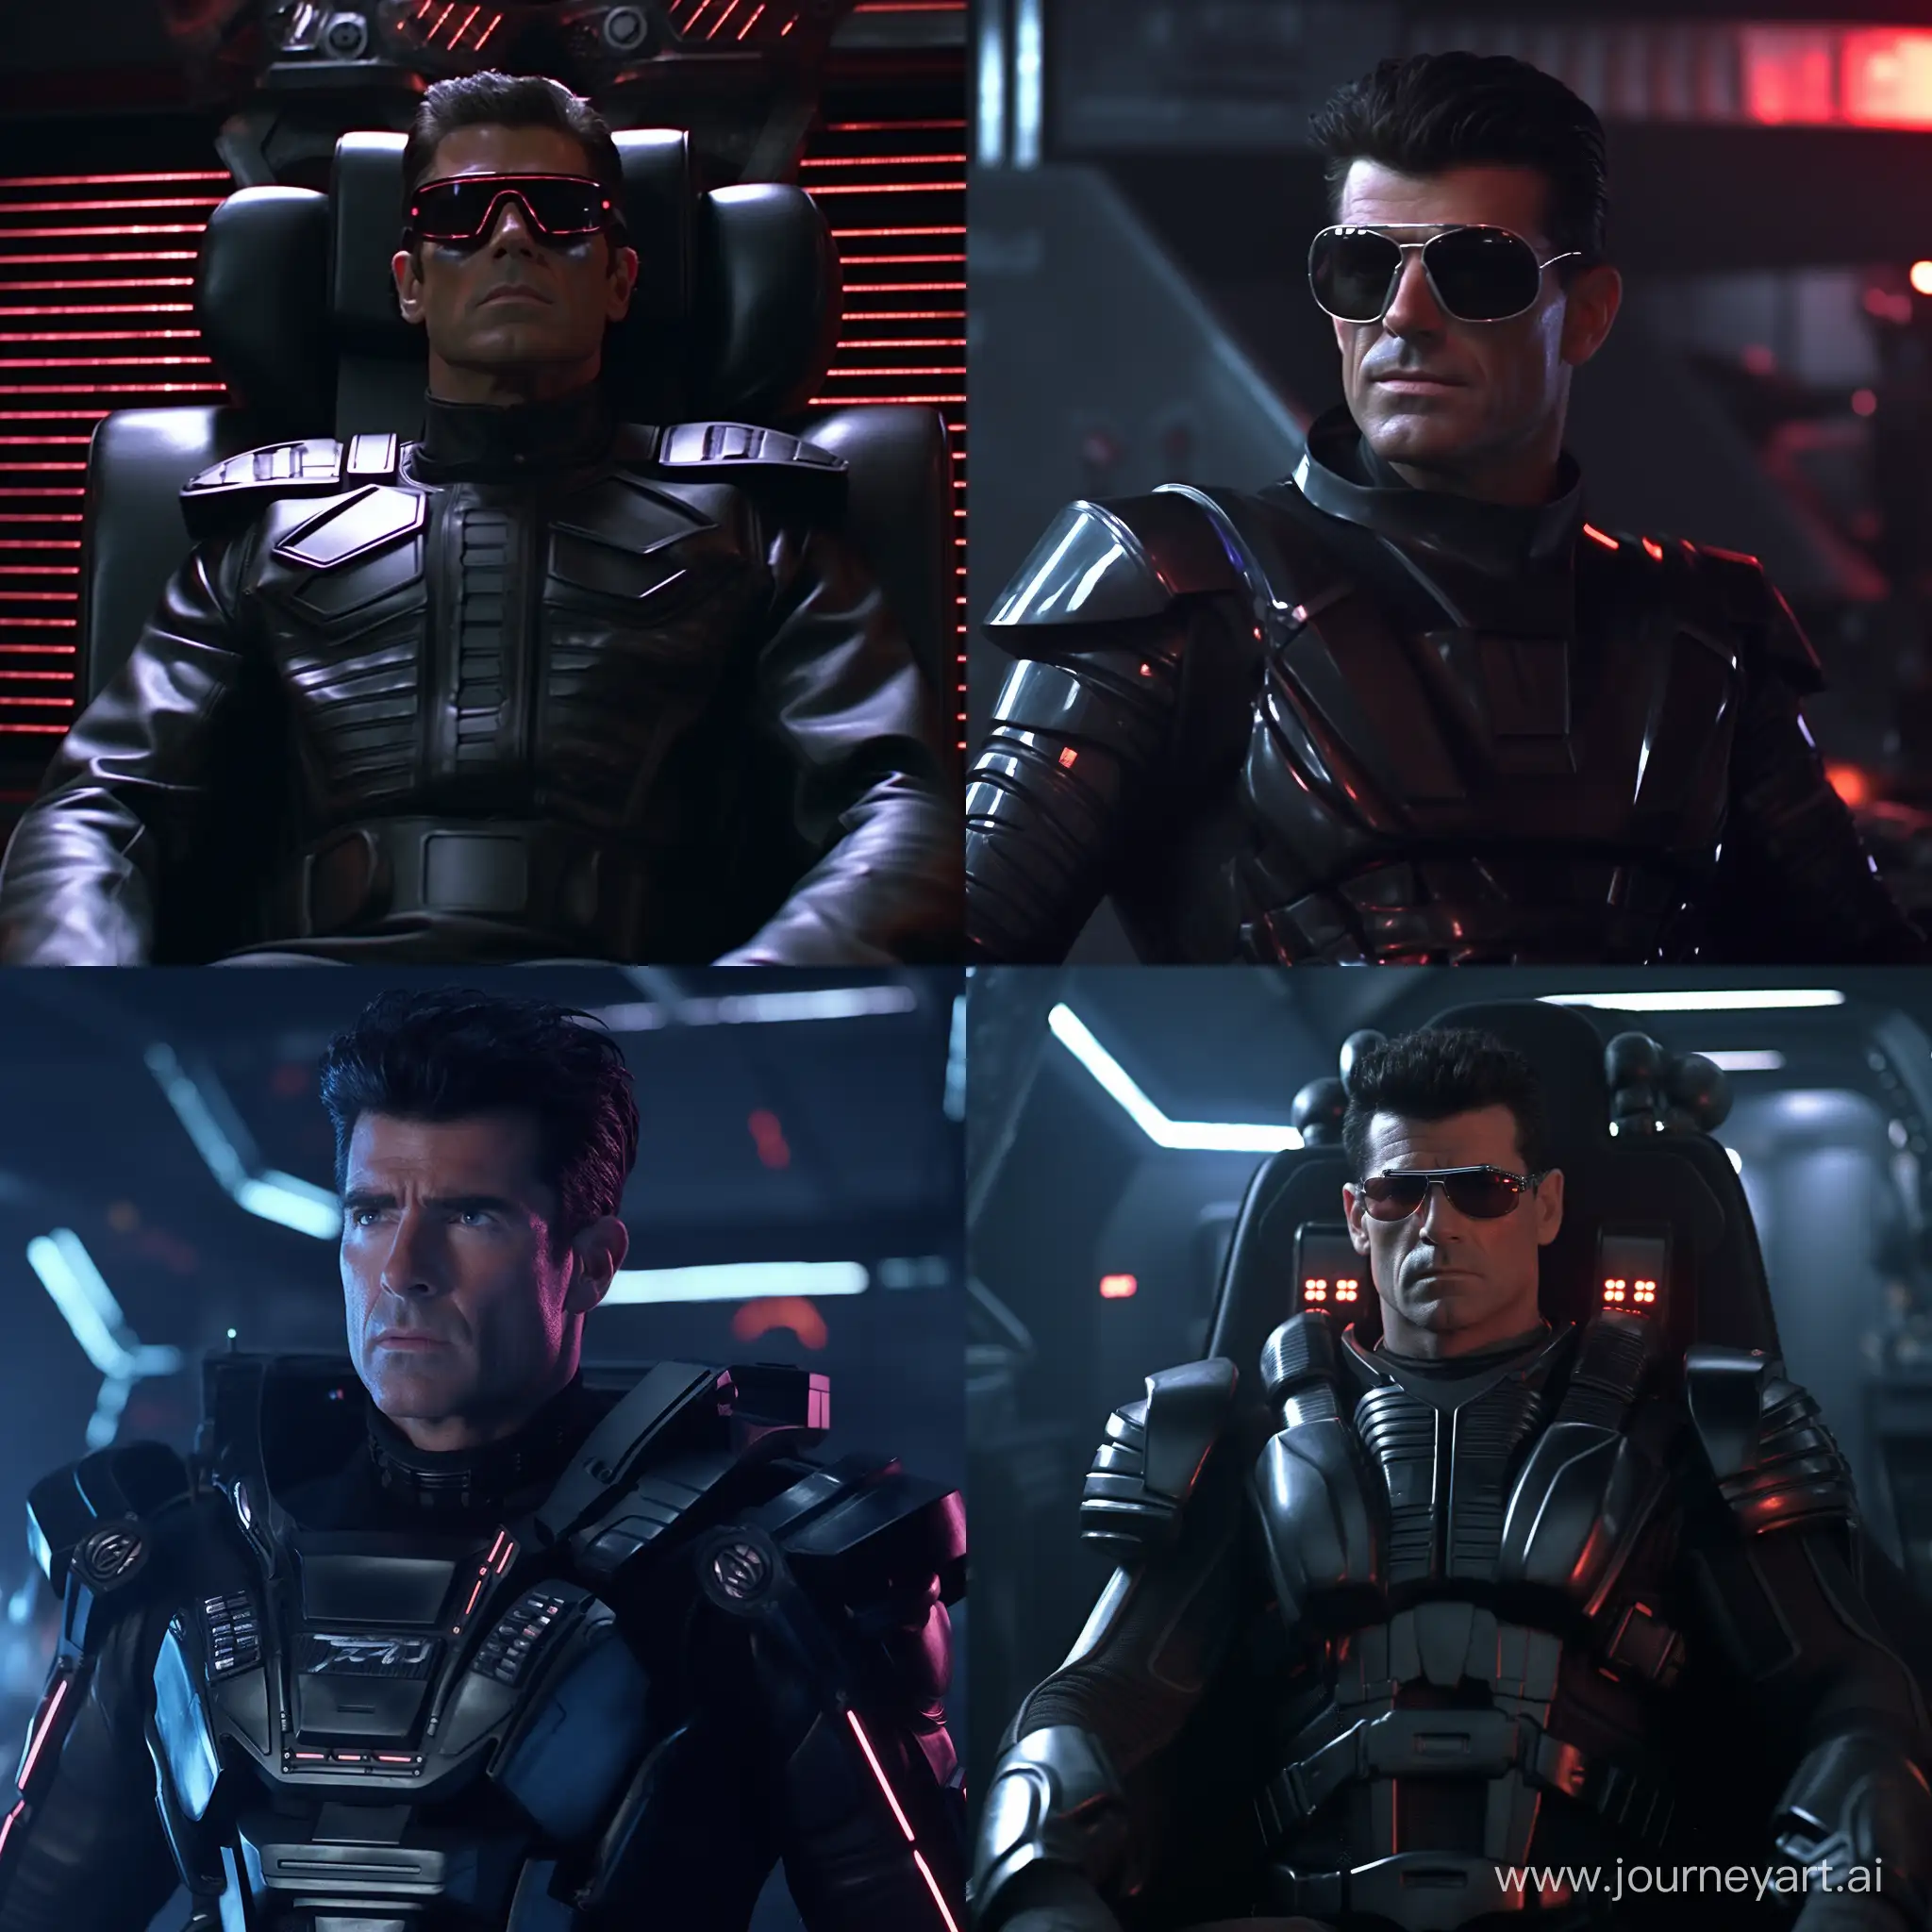 Simon Cowell in an 80s sci fi movie, dvd screengrab, cyberpunk, robocop inspired.
